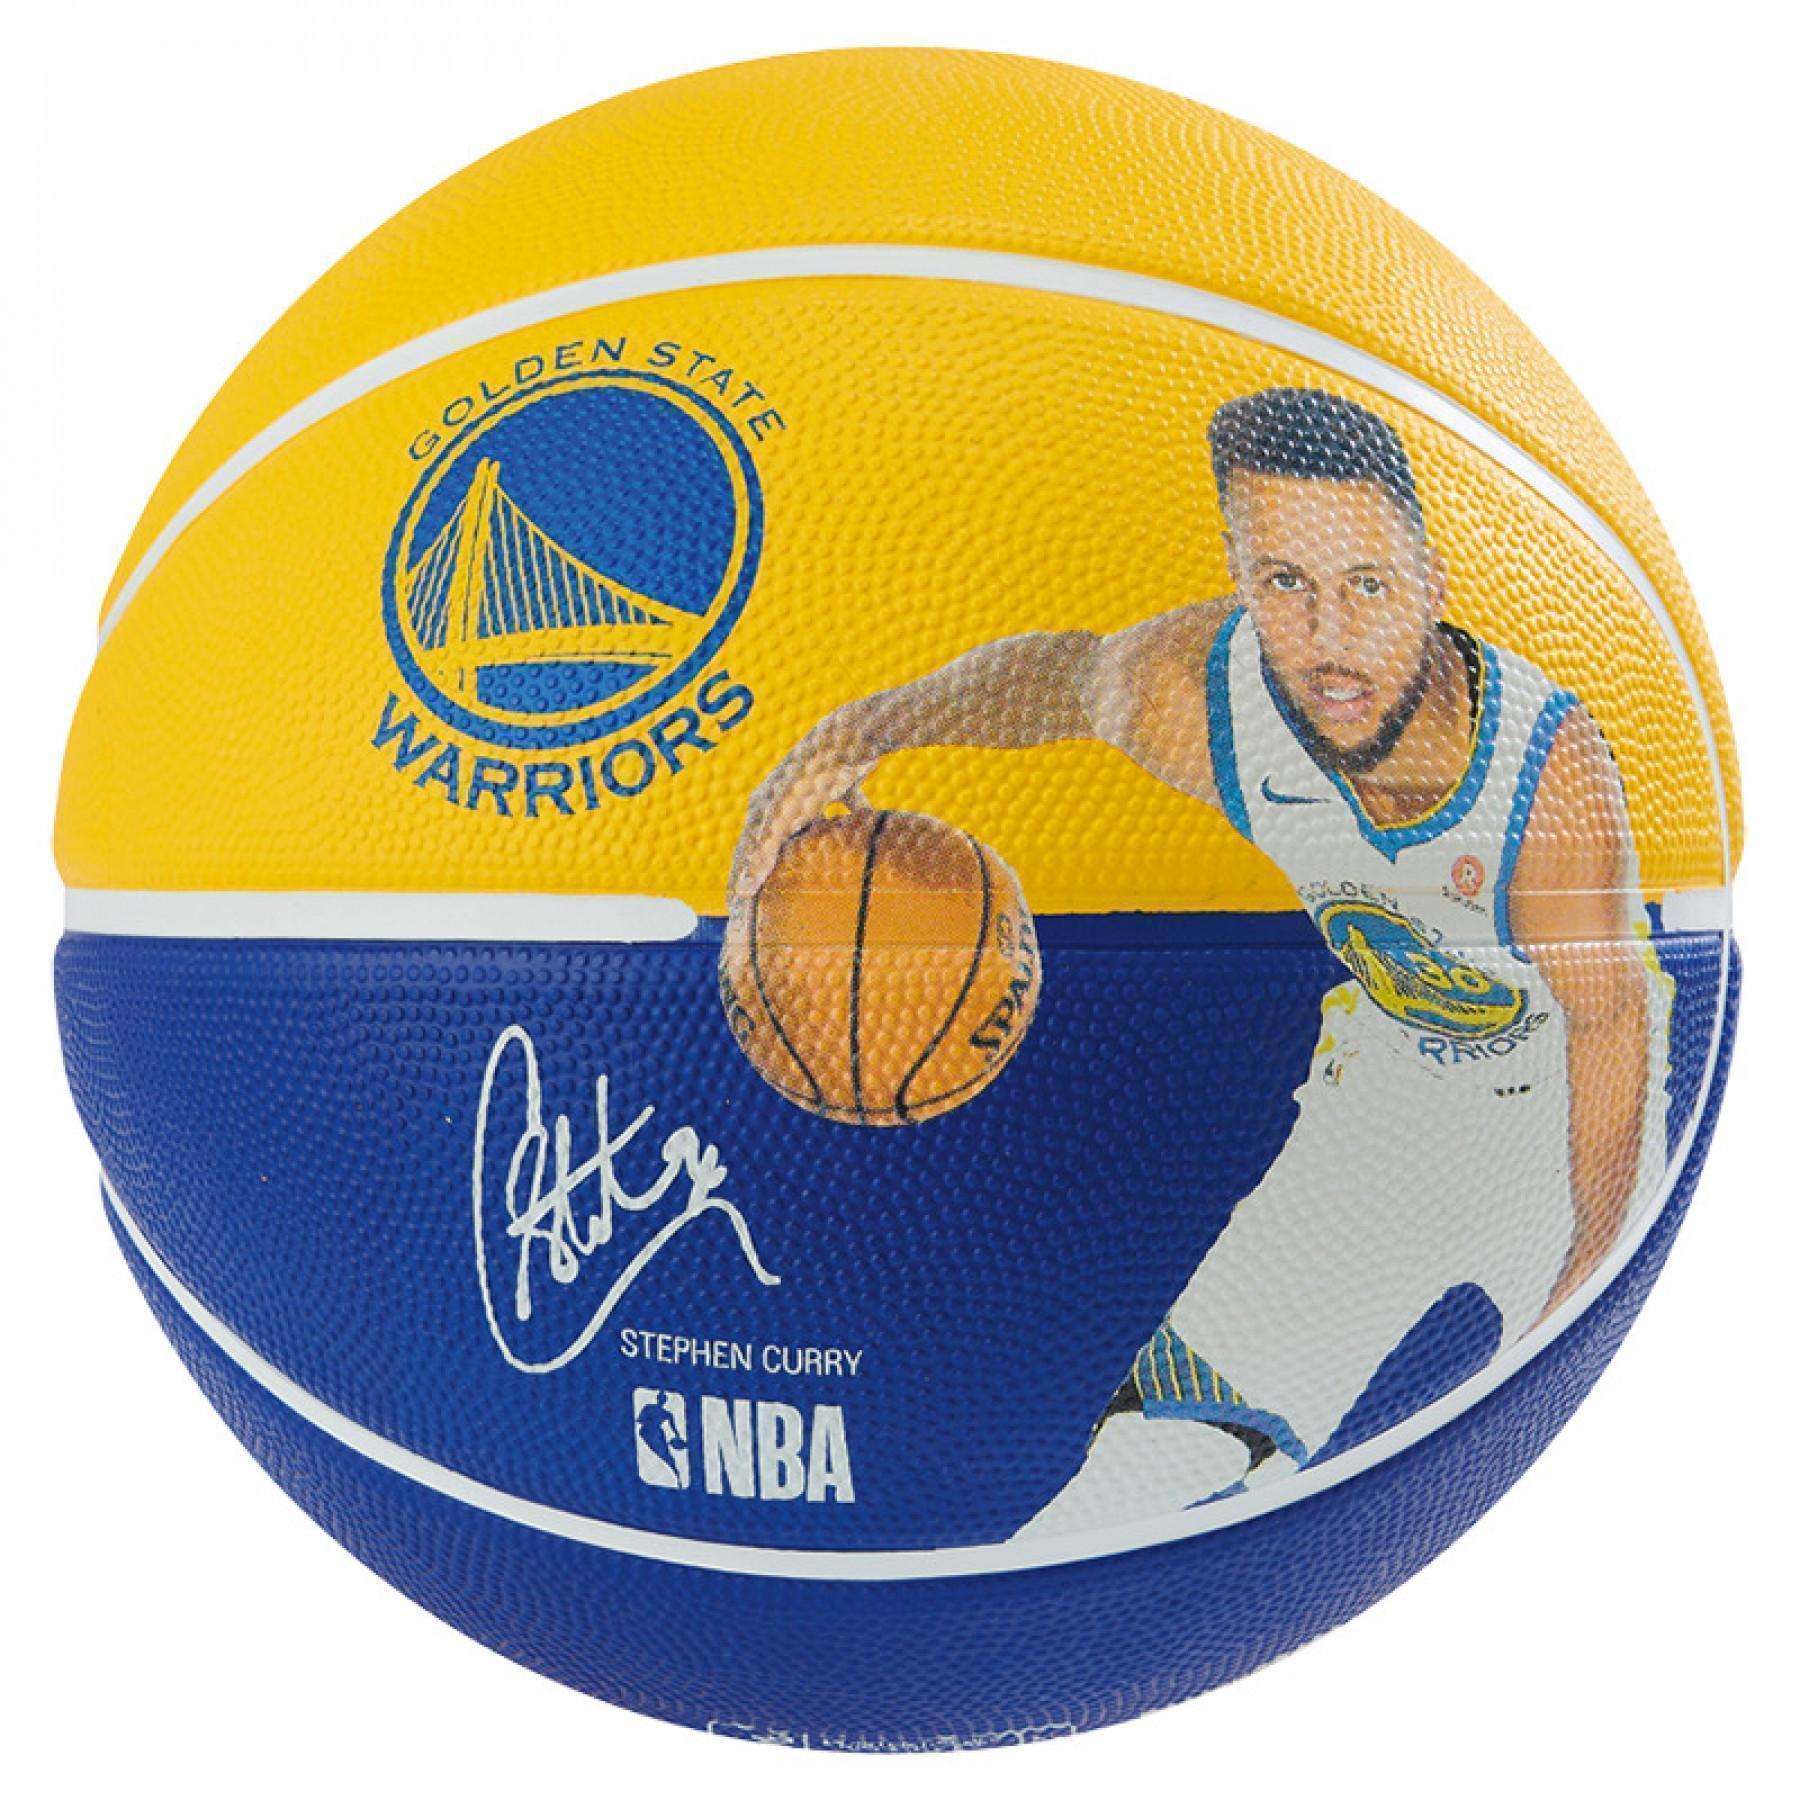 Globo Spalding NBA Player Stephen Curry (83-866z)